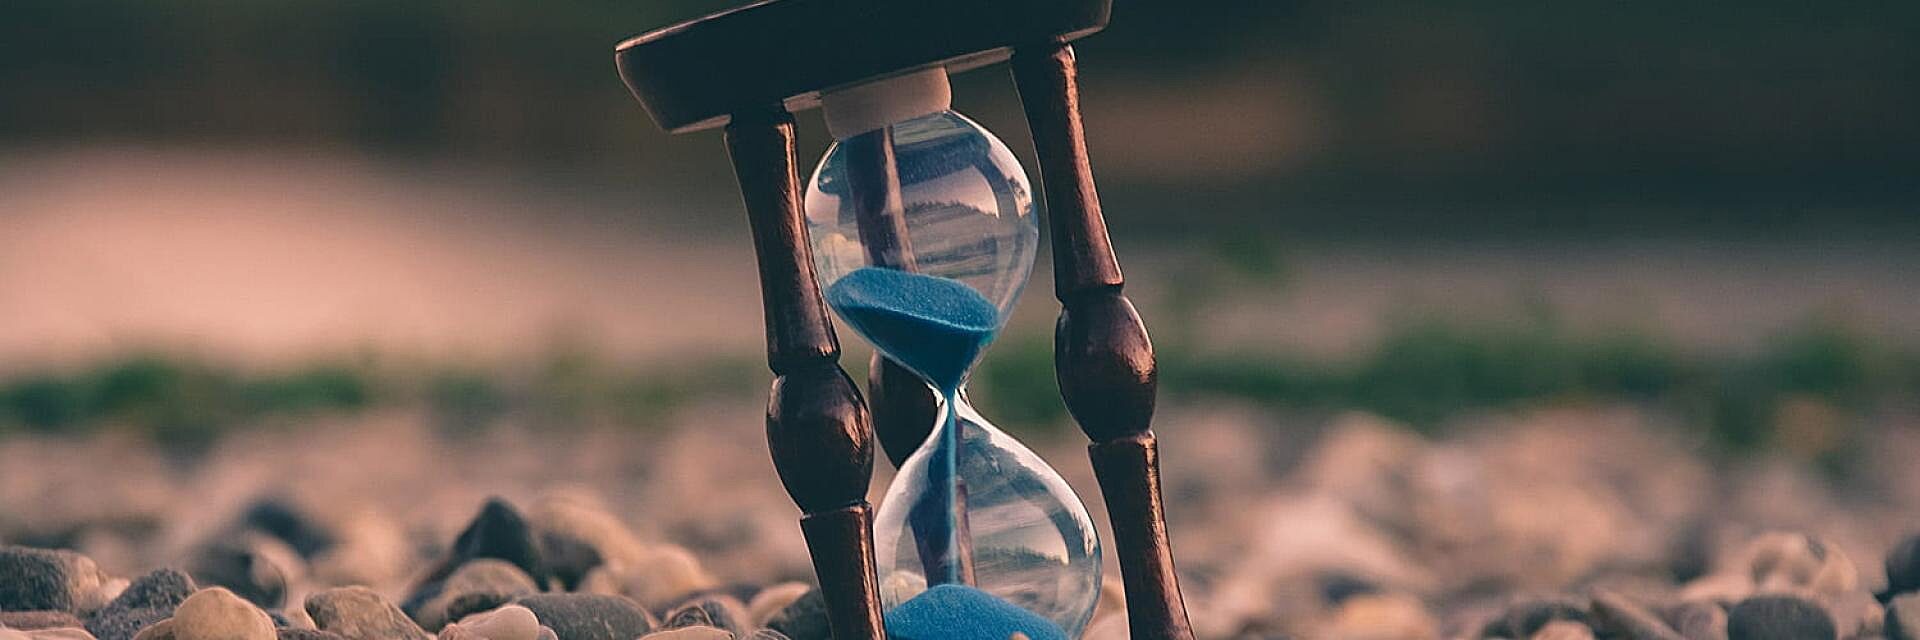 Timetracking hourglass